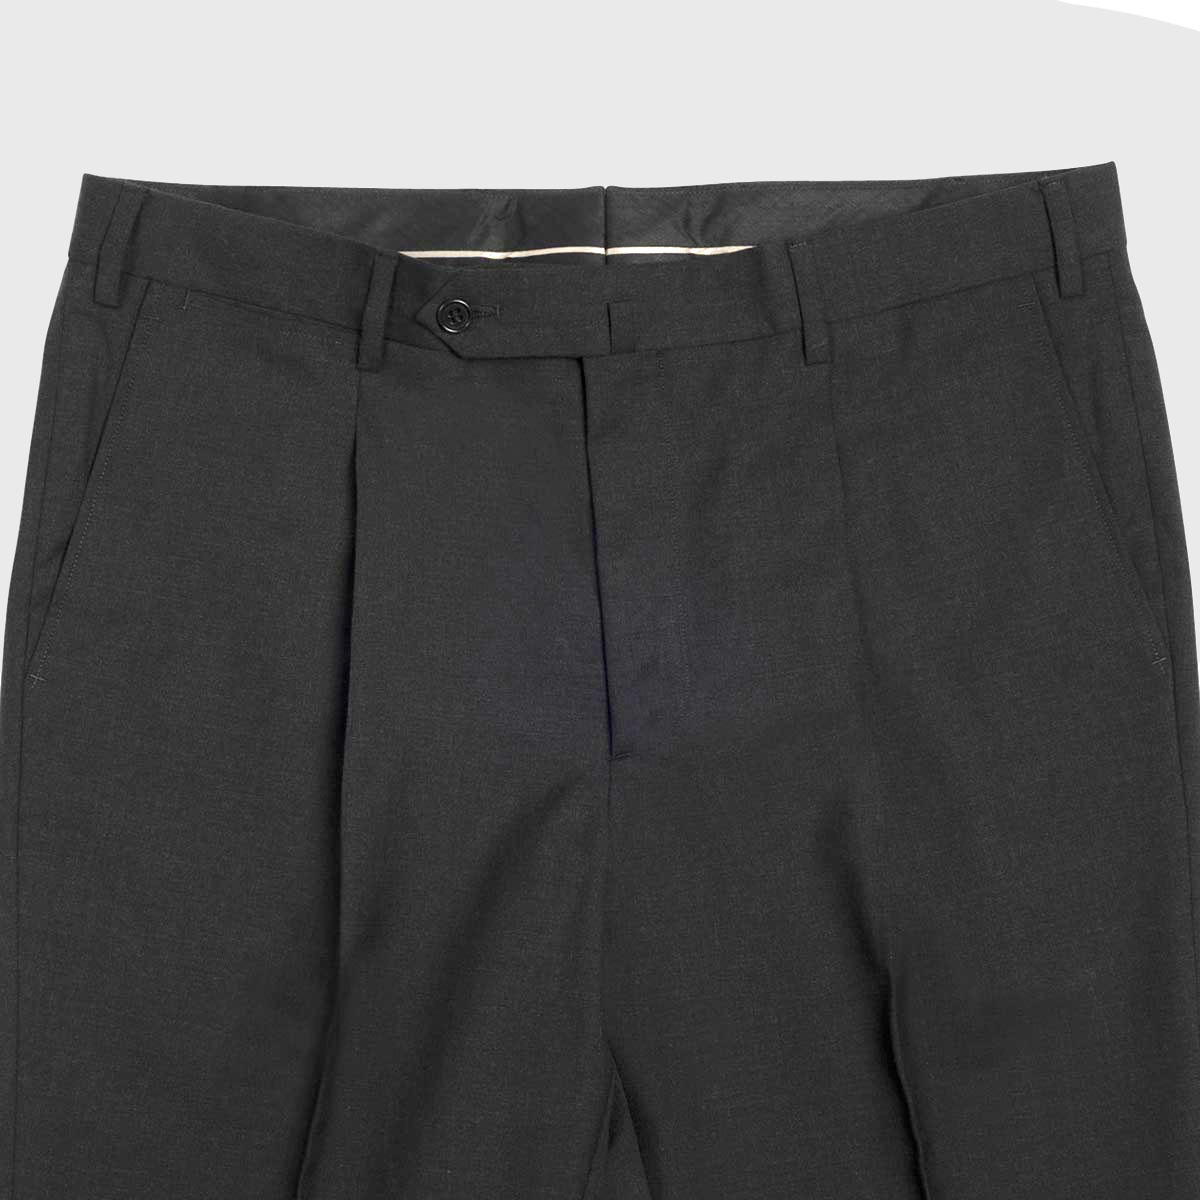 1 Pleat Super 100’s Wool Trousers in Dark Gray Sartoria Lavore on sale 2022 2